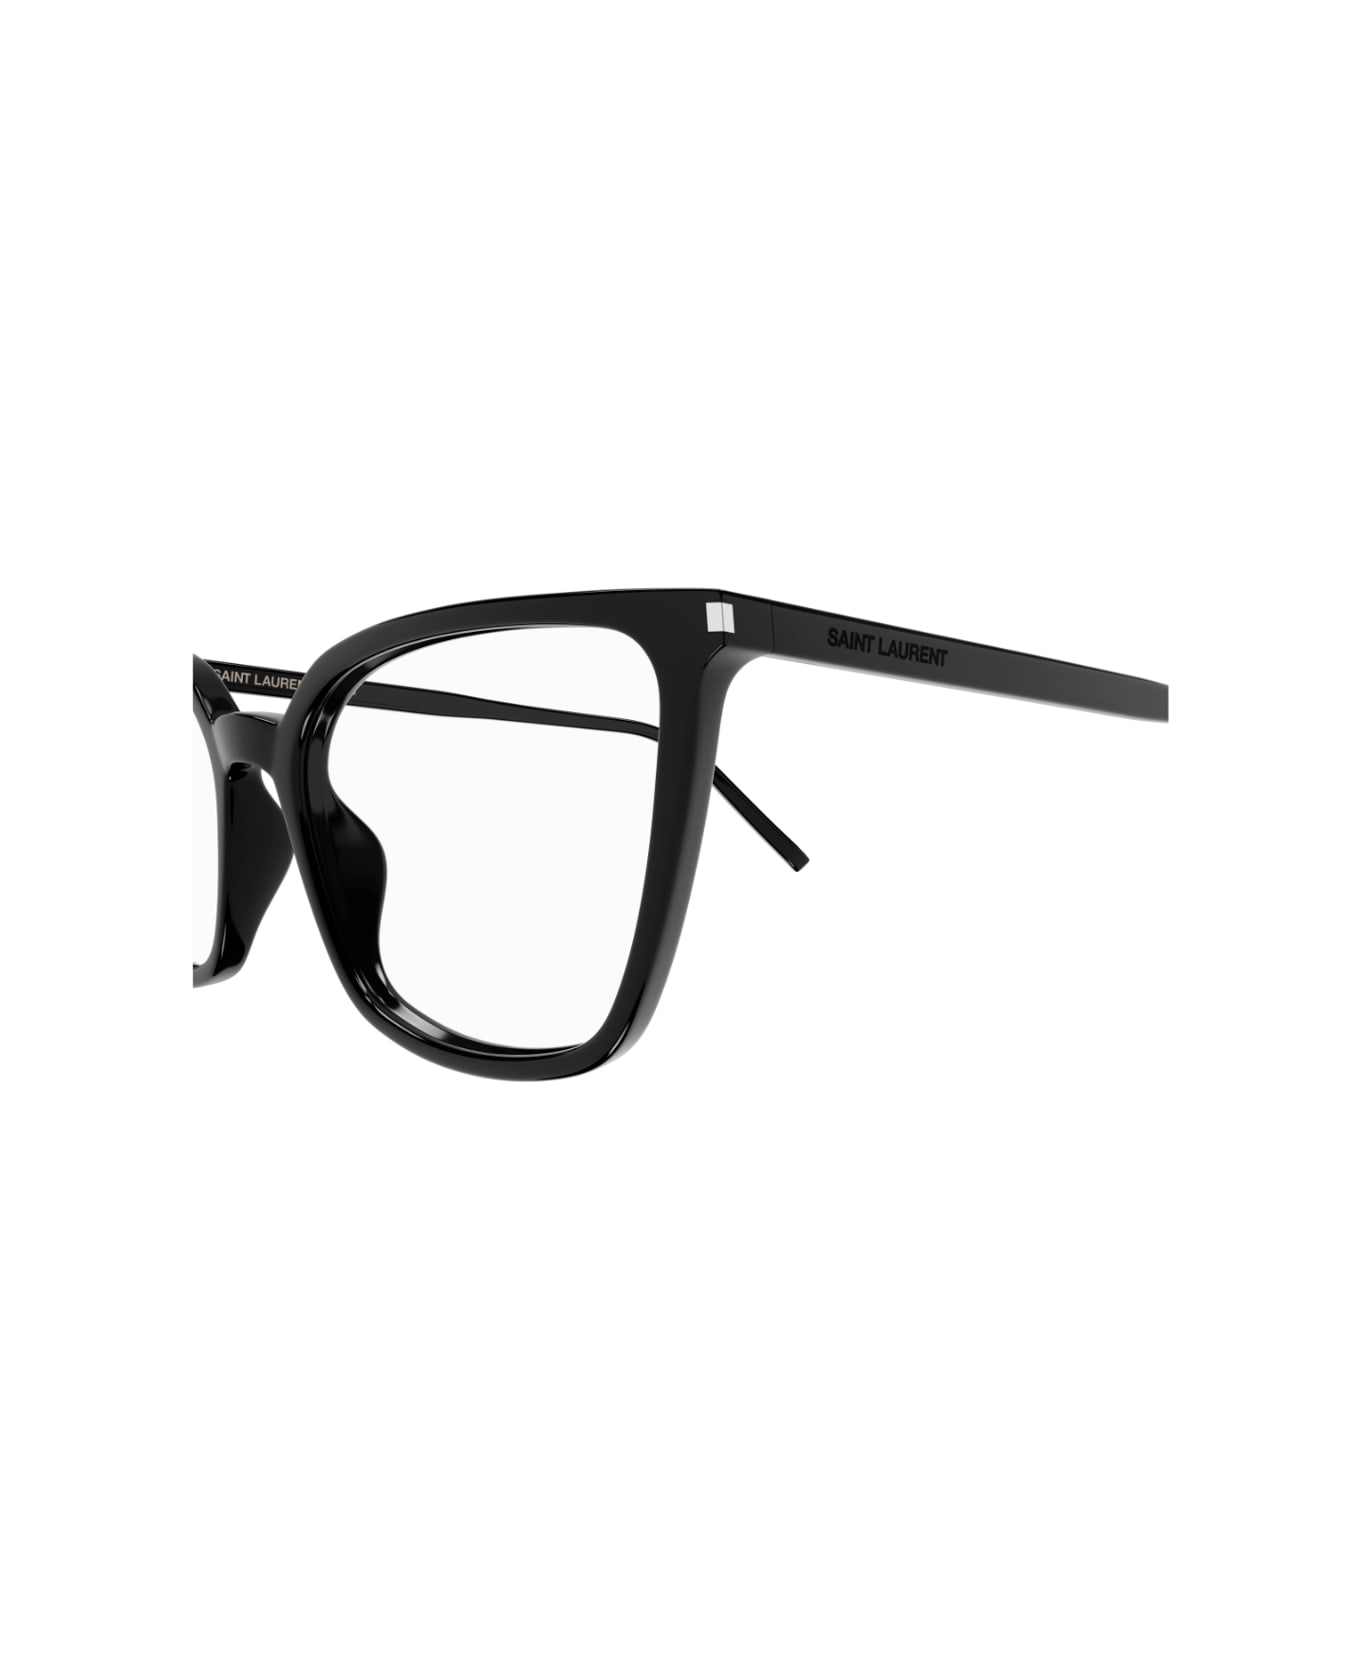 Saint Laurent Eyewear sl 669 002 Glasses